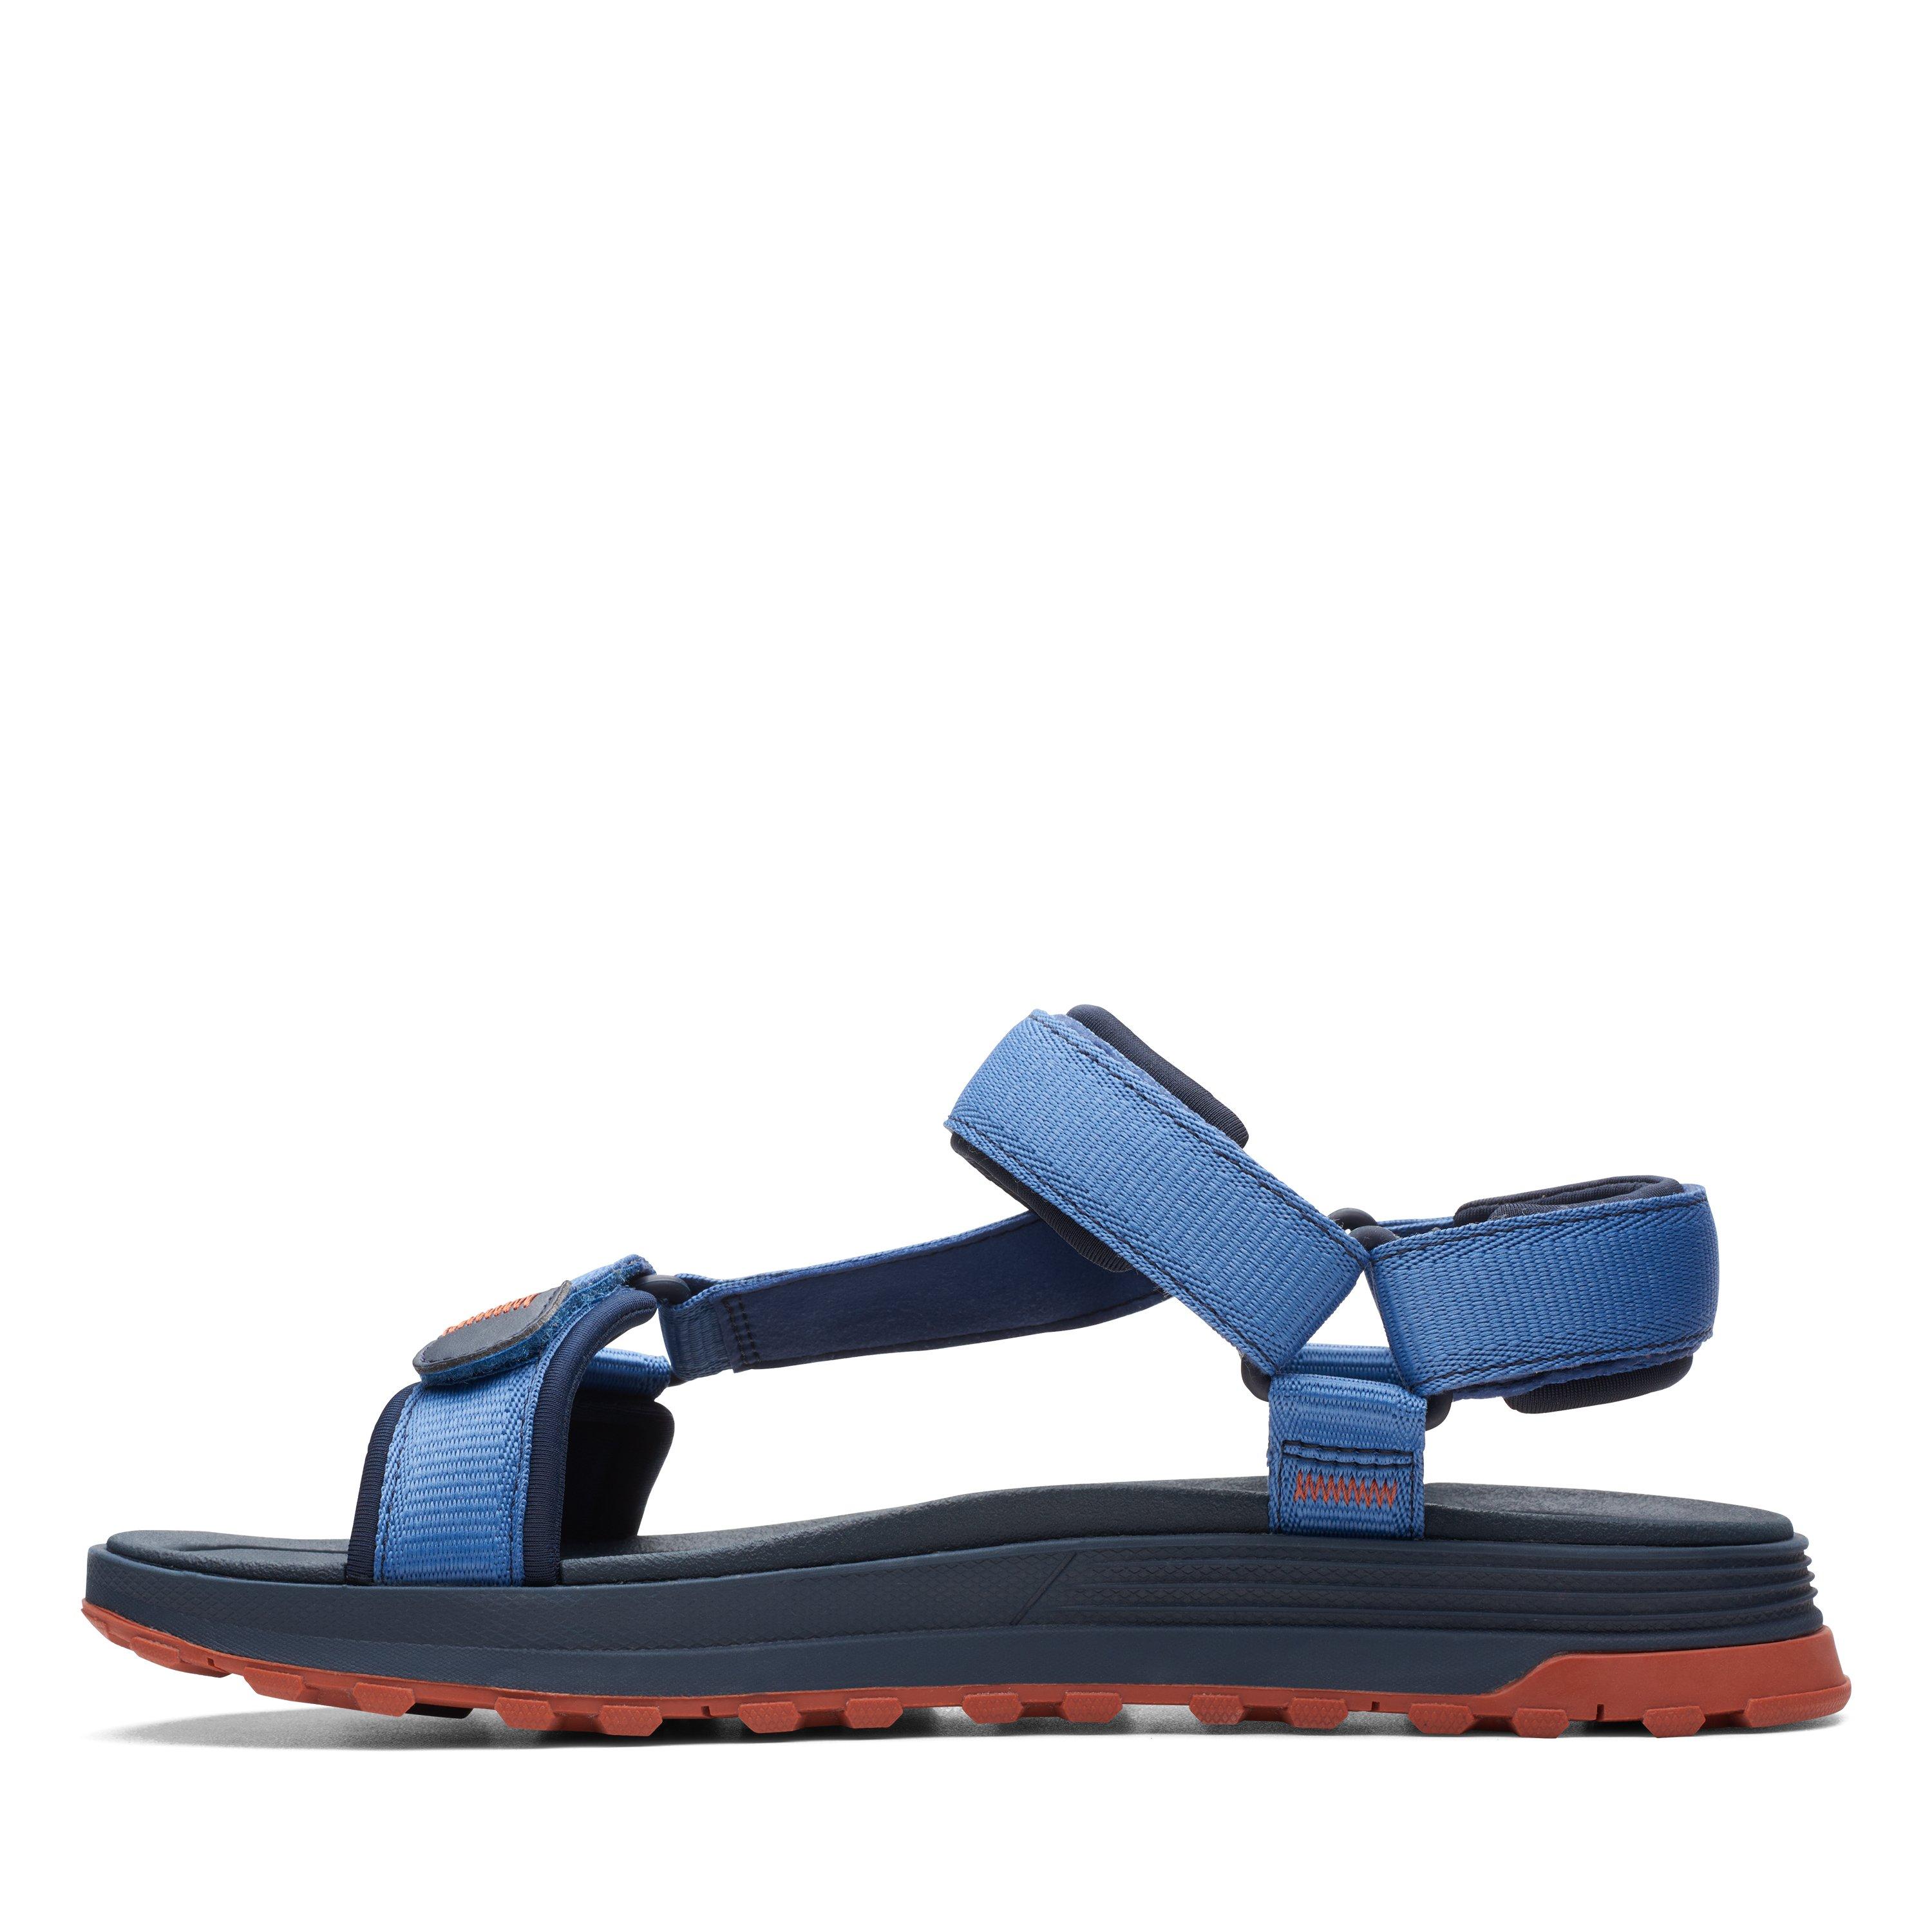 Clarks Mens ATL Trek Sea Blue Active Sport Sandals Shoes | eBay